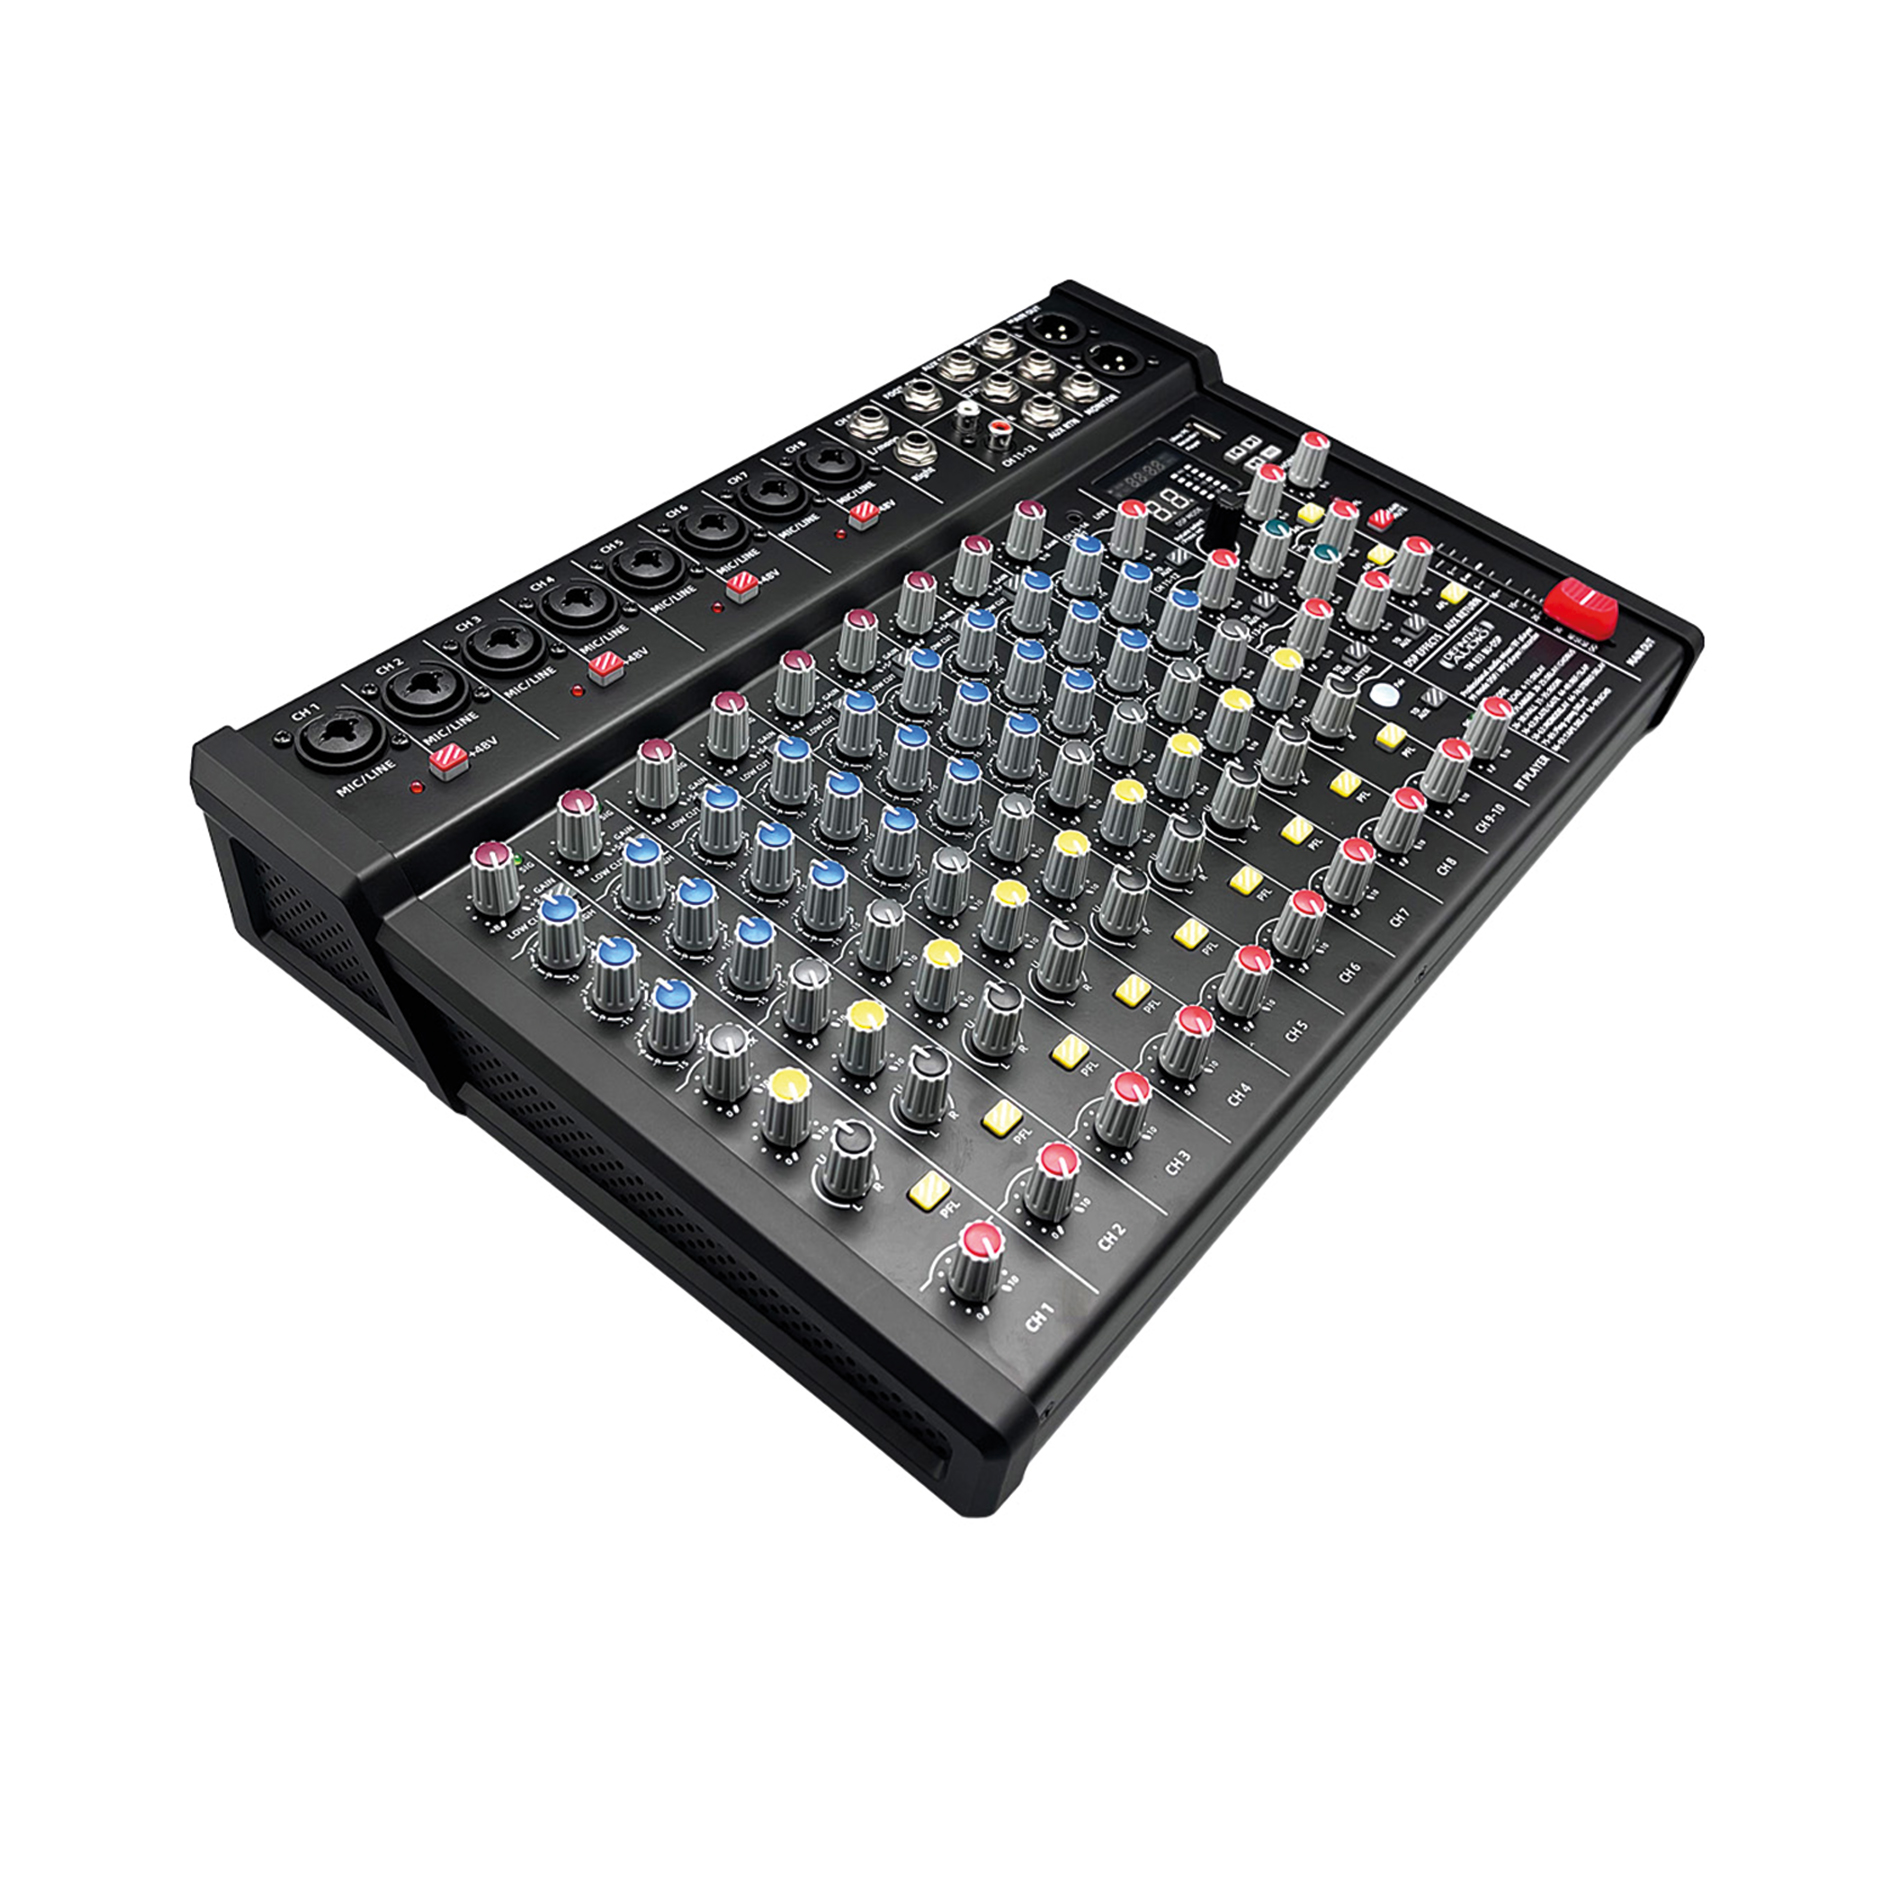 Definitive Audio Tm 833 Bu-dsp - Mesa de mezcla analógica - Variation 2